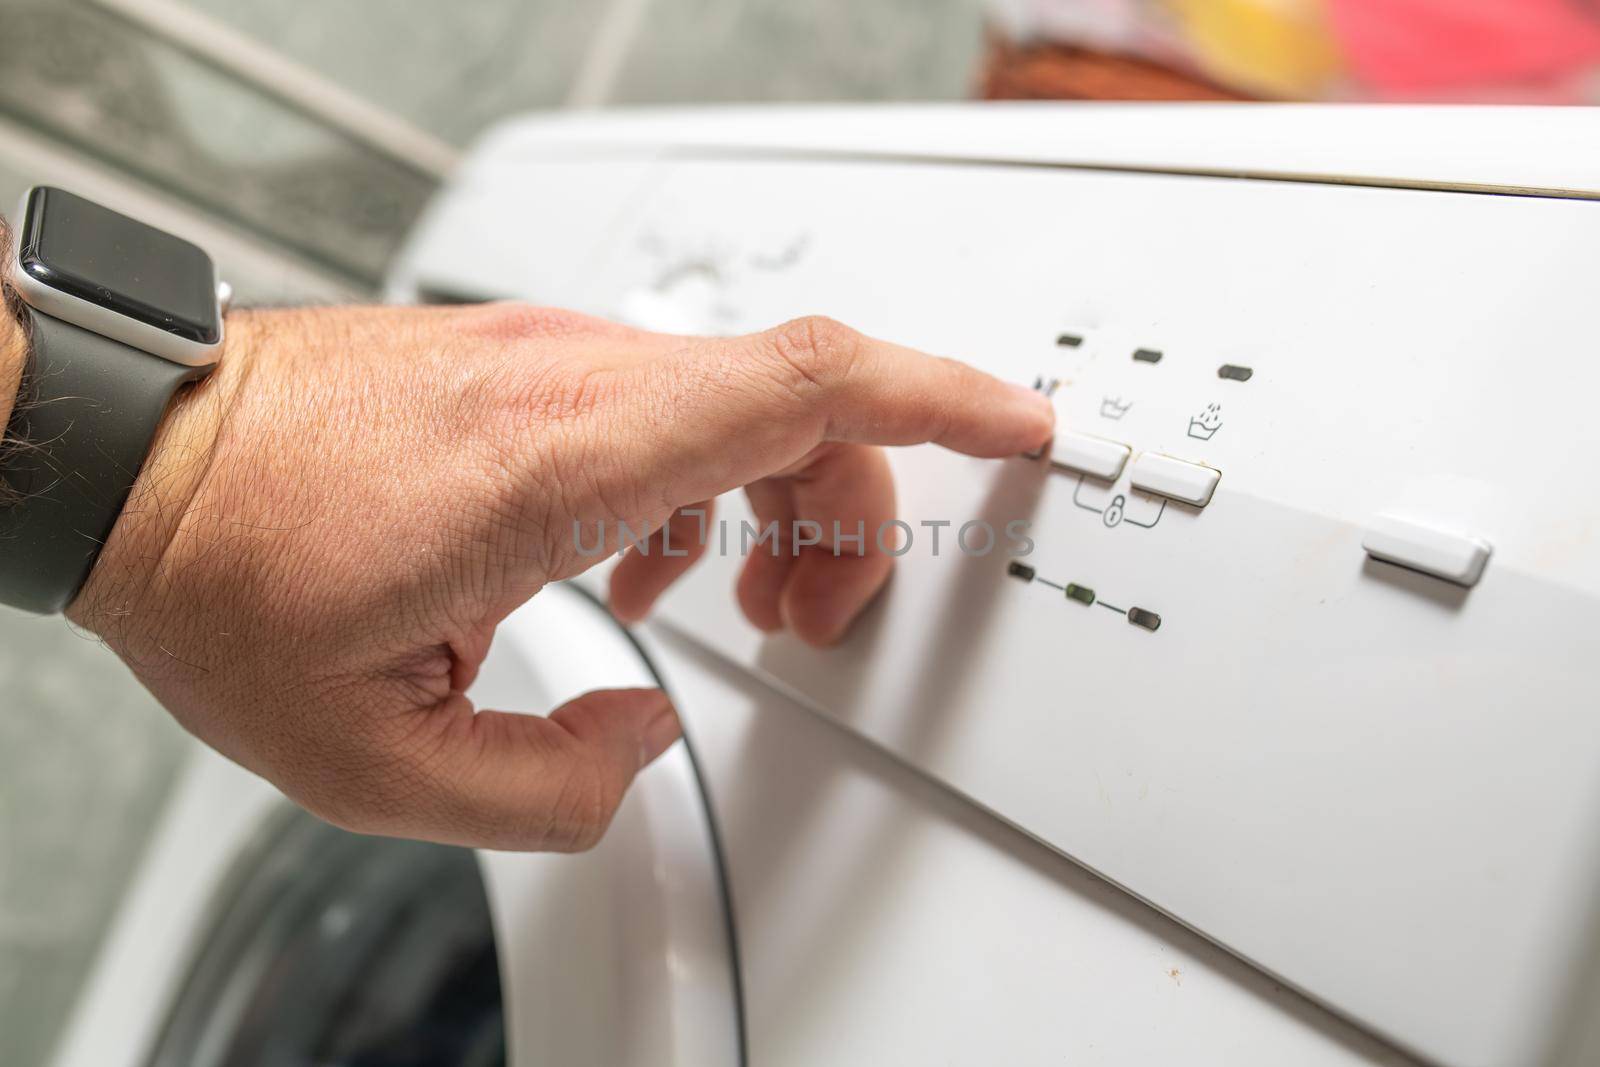 washing machine button by Sonat